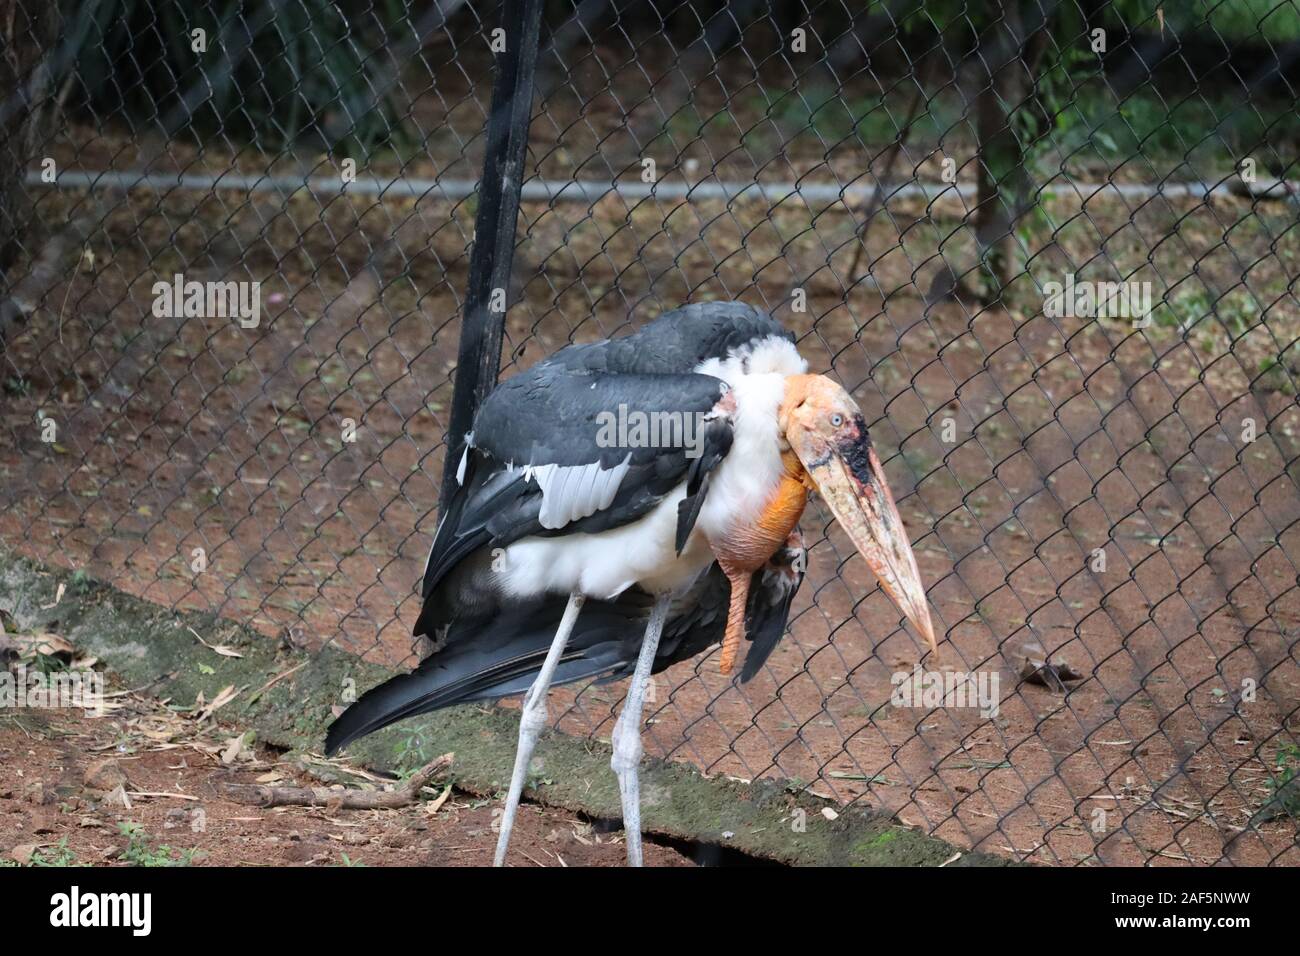 Marabou close up. The greater adjutant (Leptoptilos dubius) is a member of the stork family.File #: 272935813 Preview Crop Find Similar Leptoptilos du Stock Photo